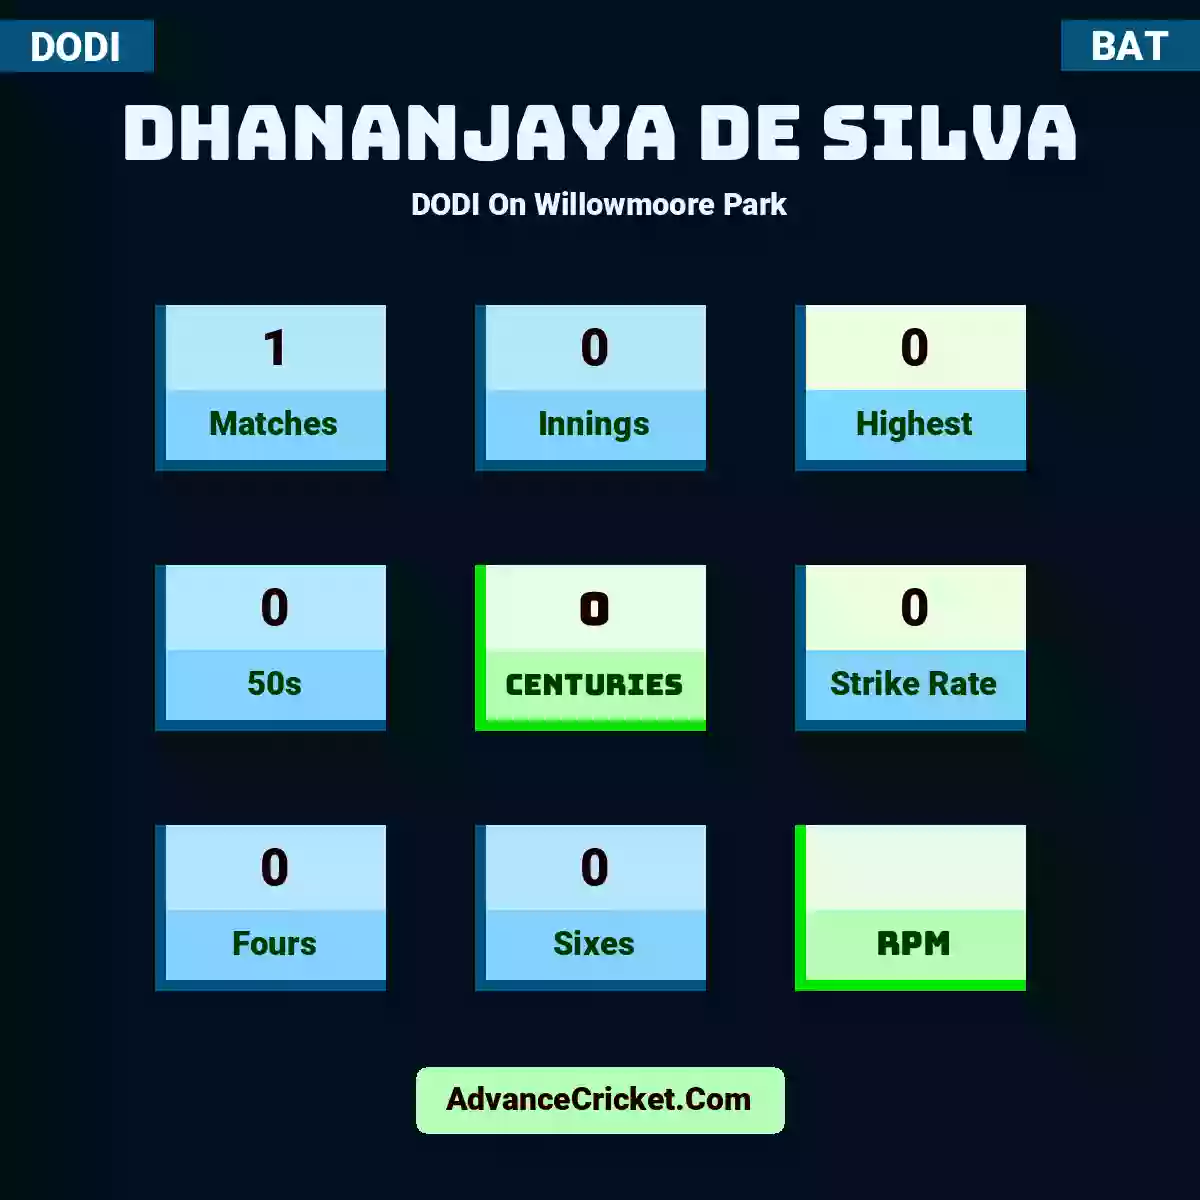 Dhananjaya de Silva DODI  On Willowmoore Park, Dhananjaya de Silva played 1 matches, scored 0 runs as highest, 0 half-centuries, and 0 centuries, with a strike rate of 0. D.Silva hit 0 fours and 0 sixes.